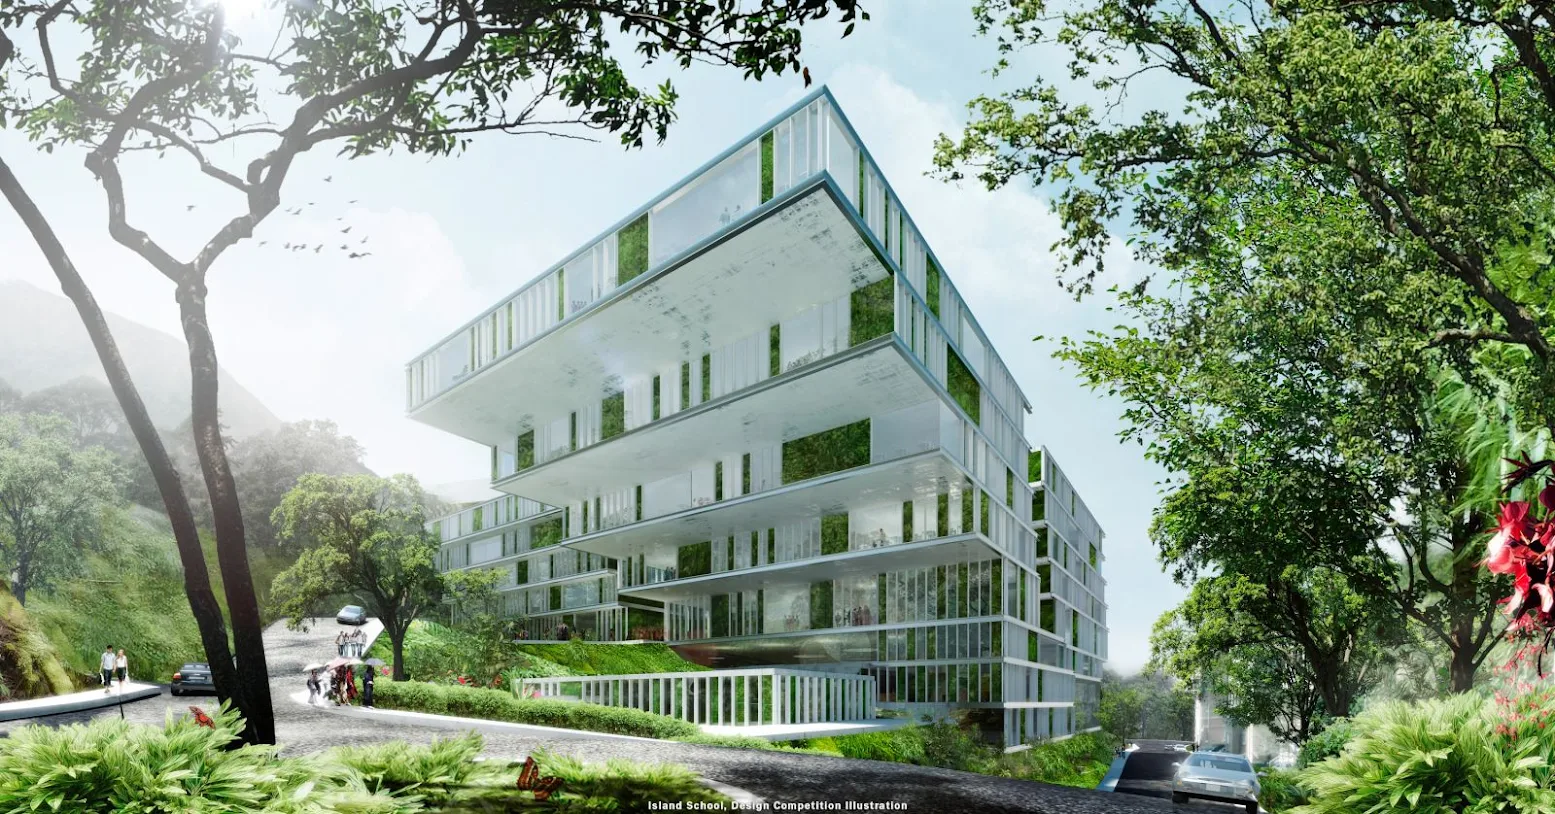 Island School by schmidt hammer lassen architects